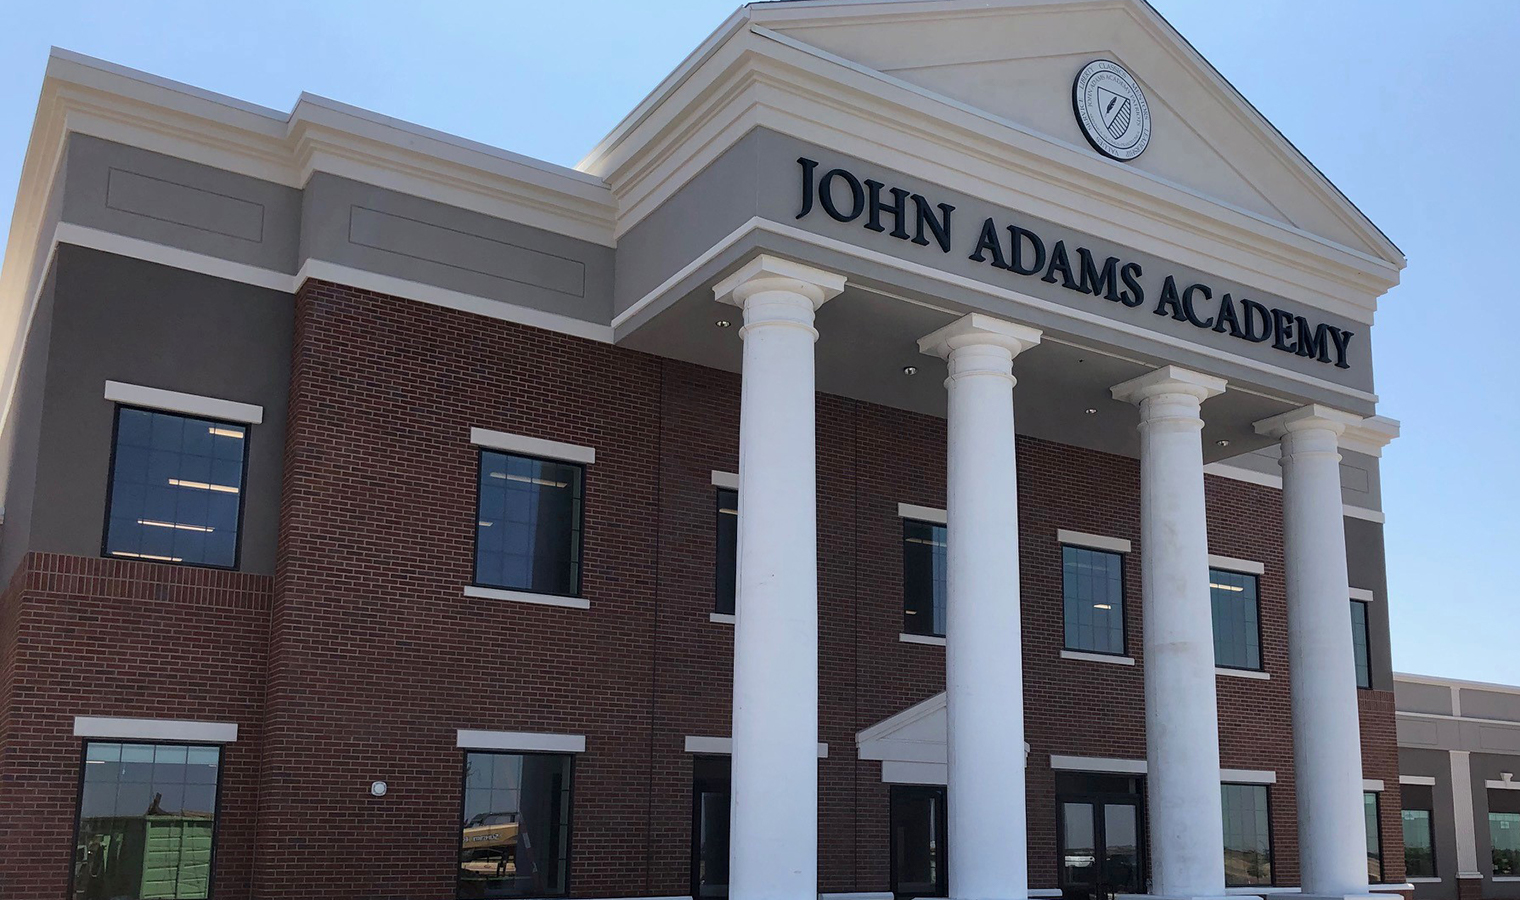 John Adams Academy Teaser Image